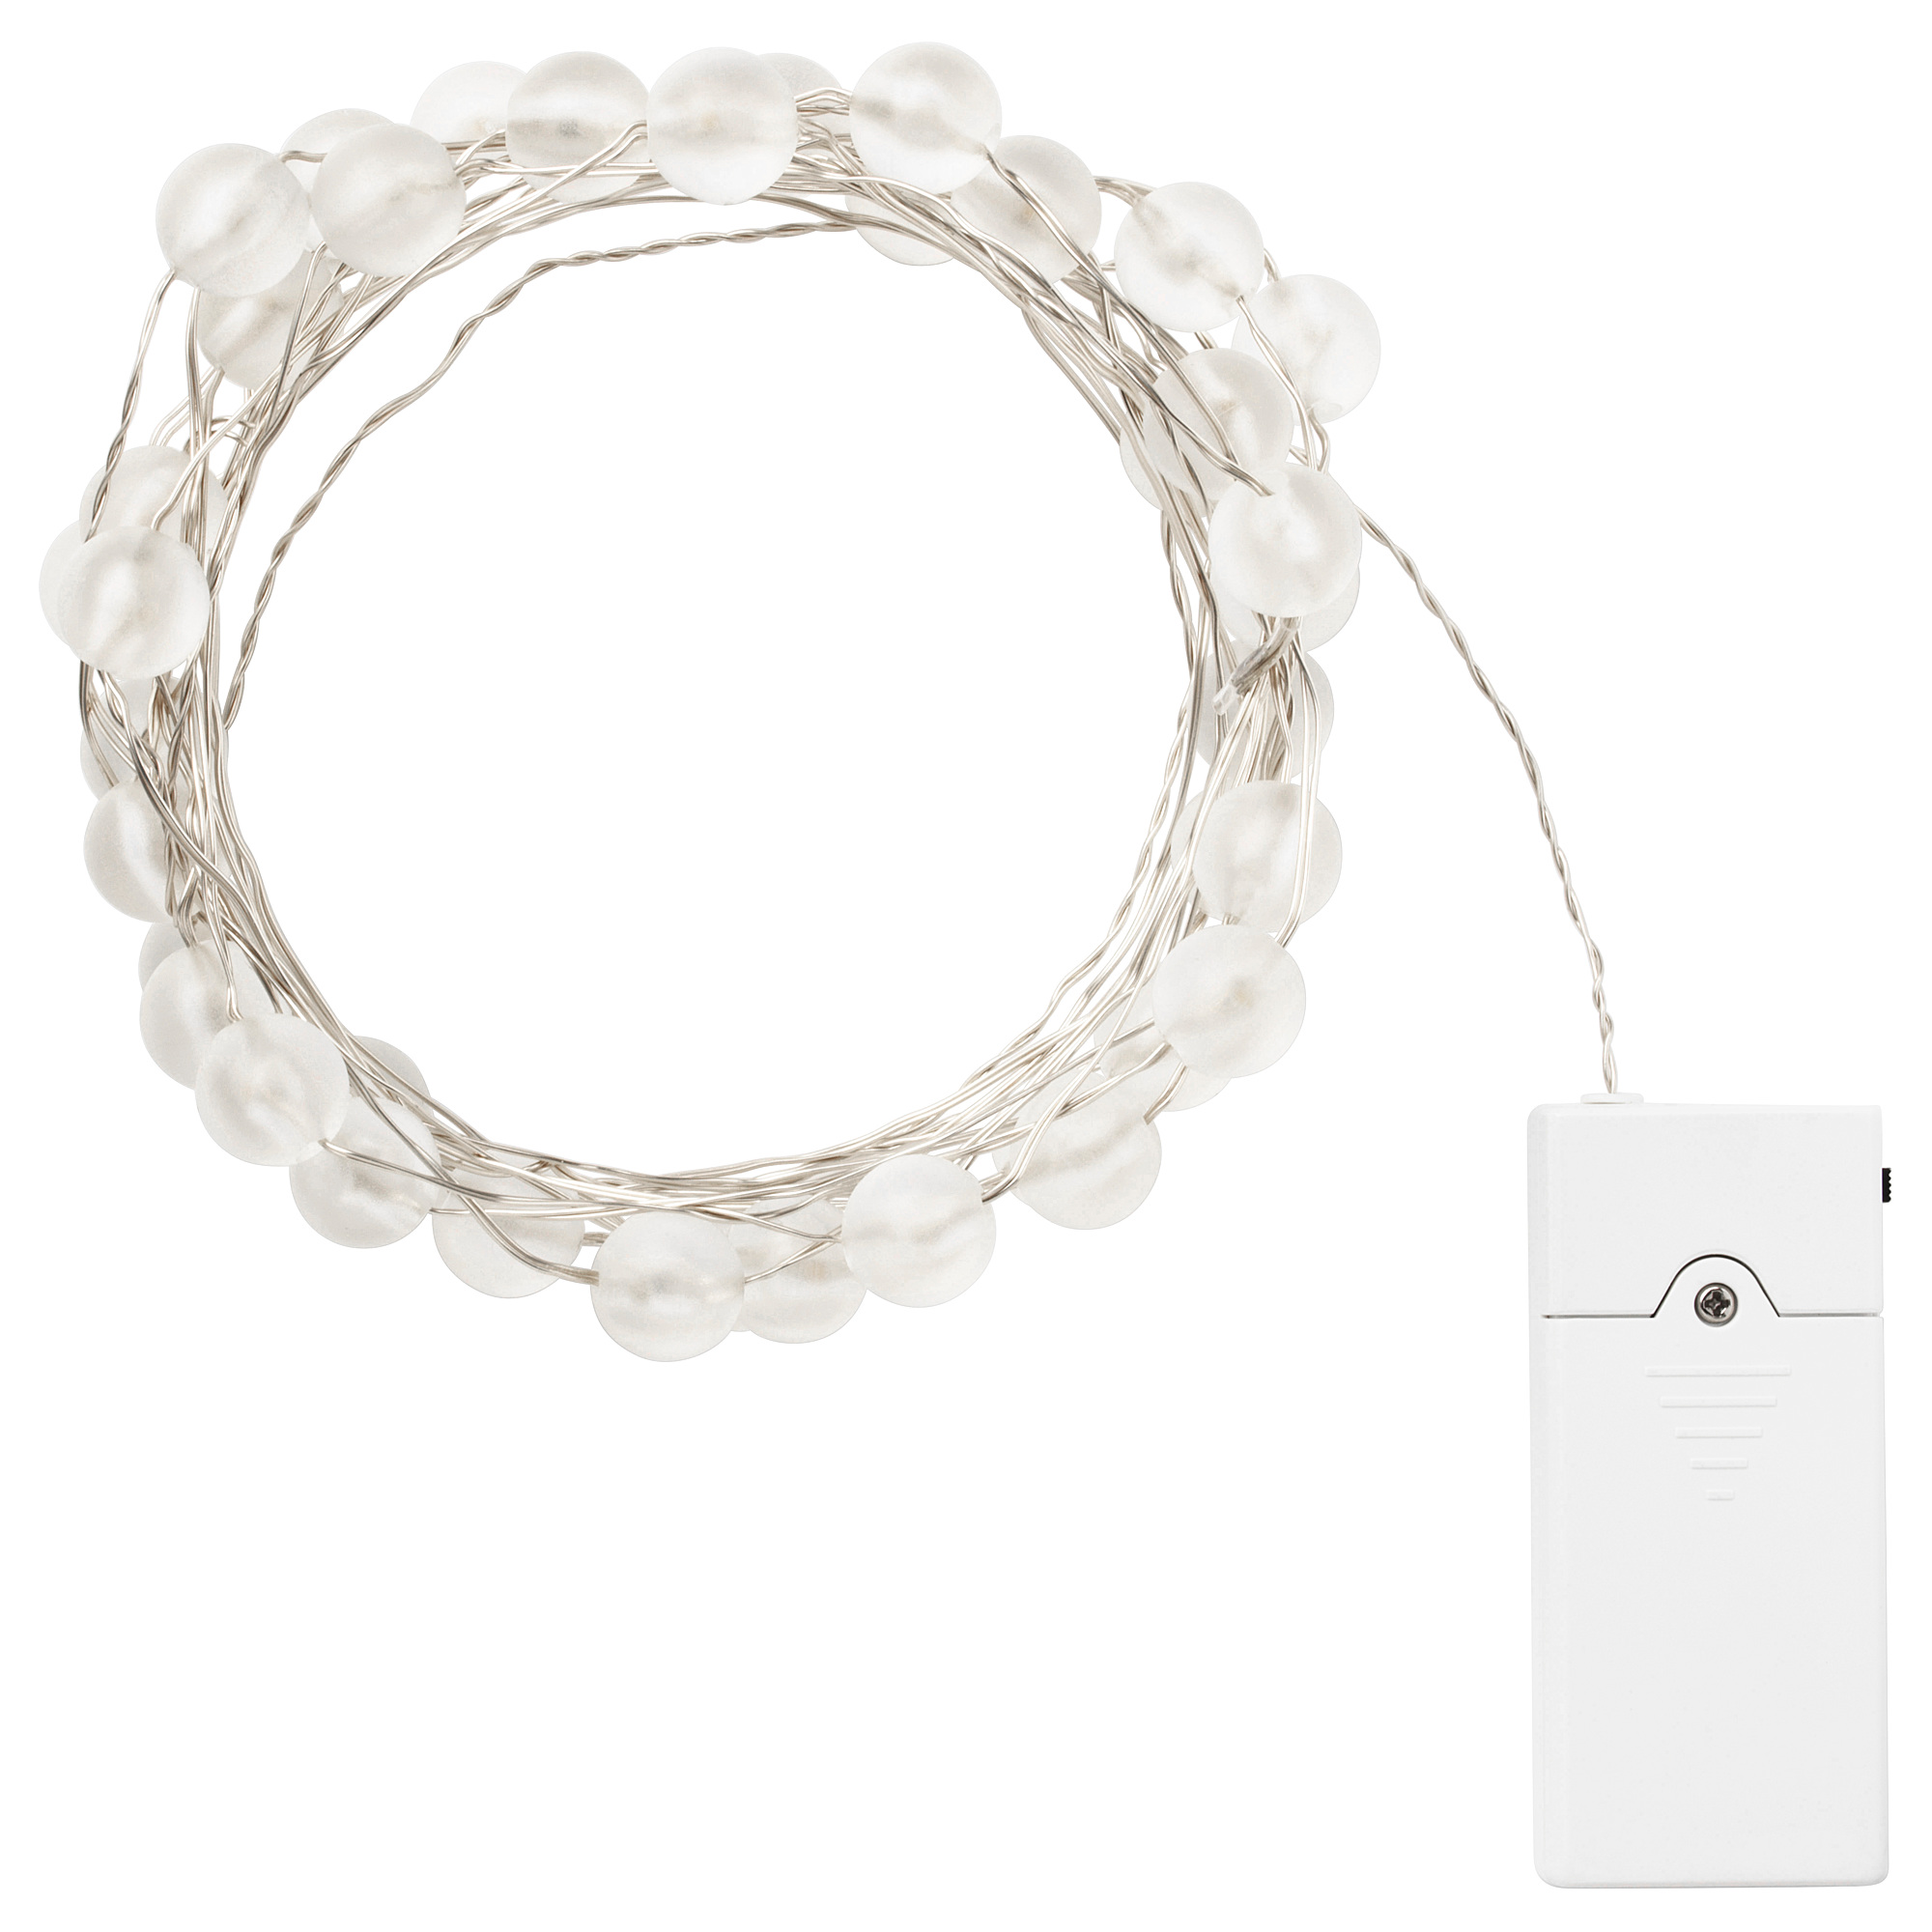 SNÖYRA LED lighting chain with 40 lights